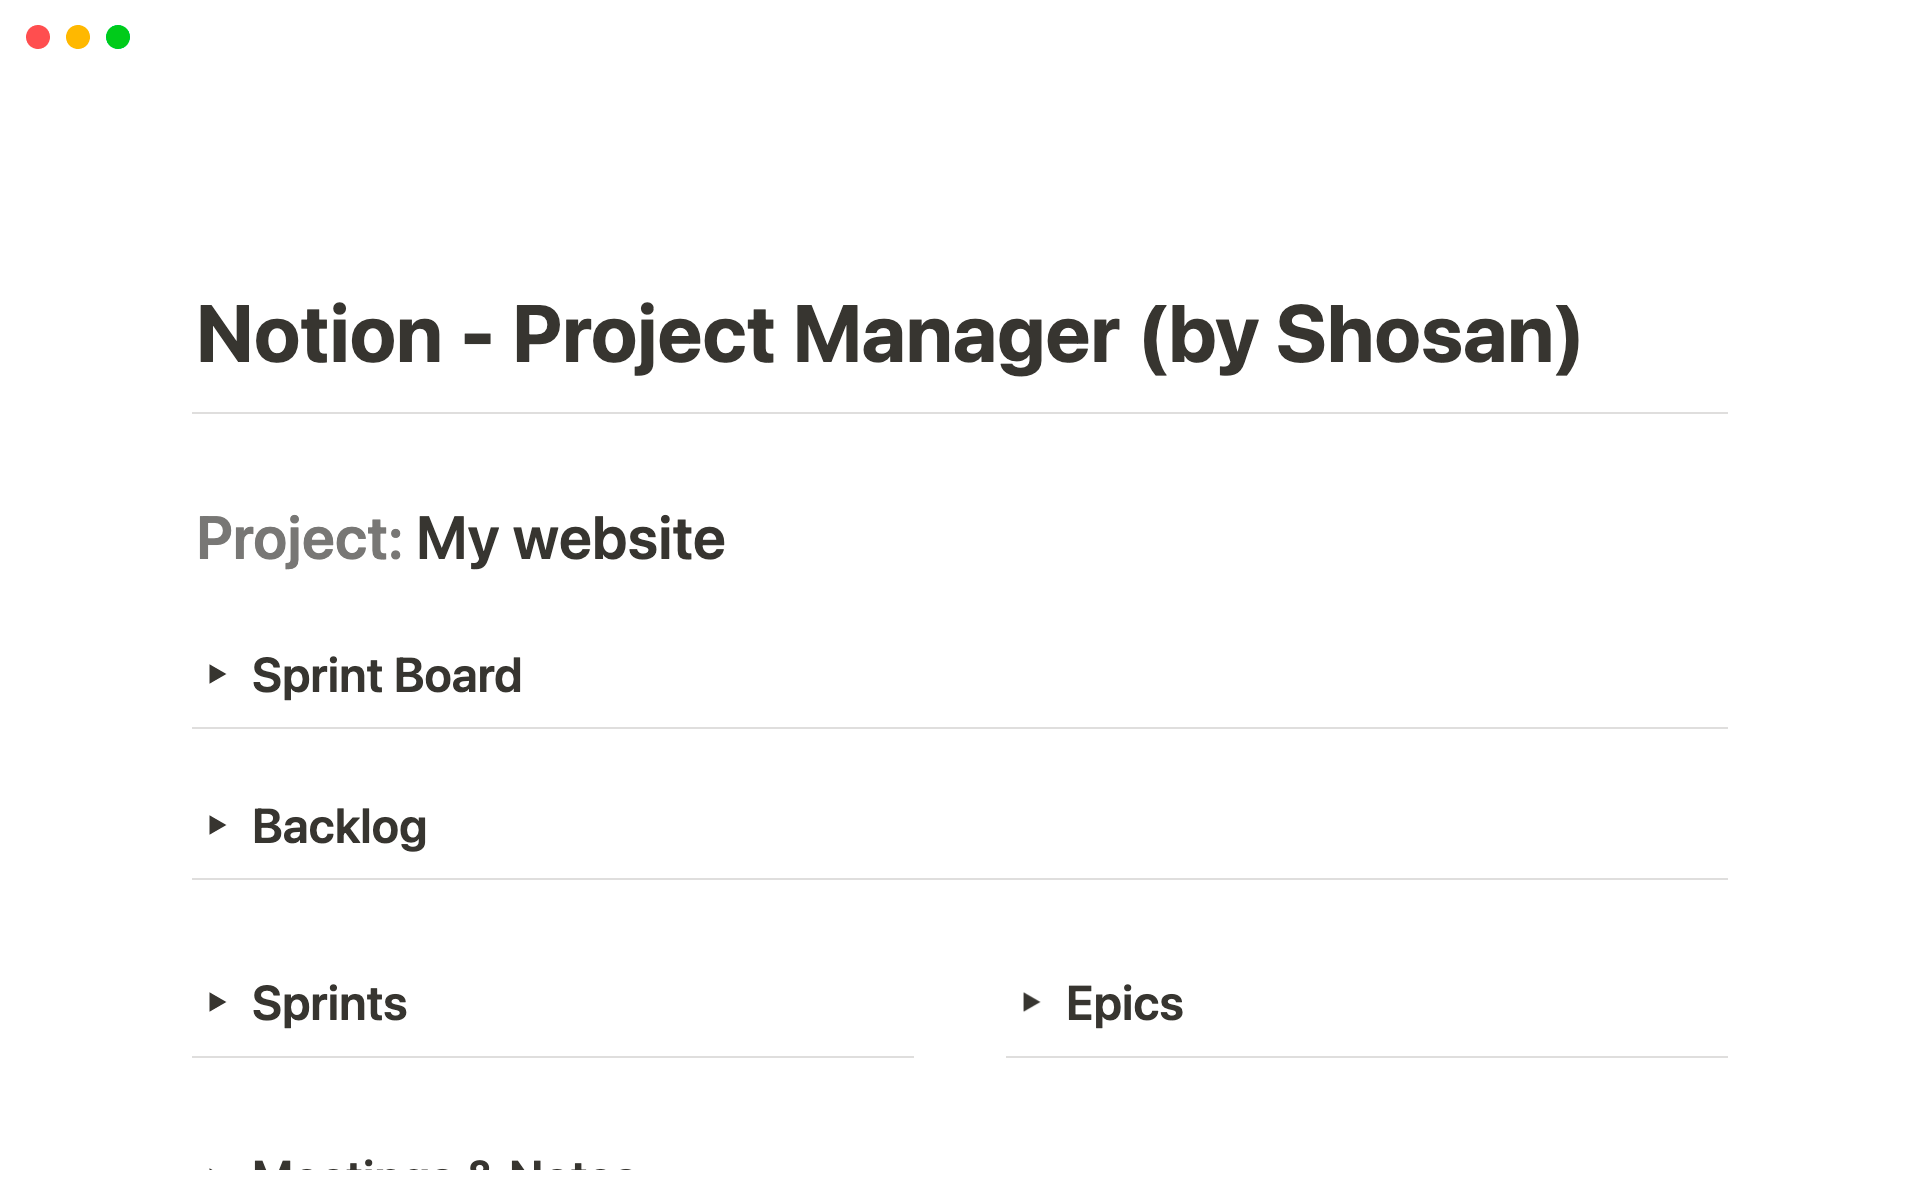 Vista previa de plantilla para Notion Project Manager (by Shosan)